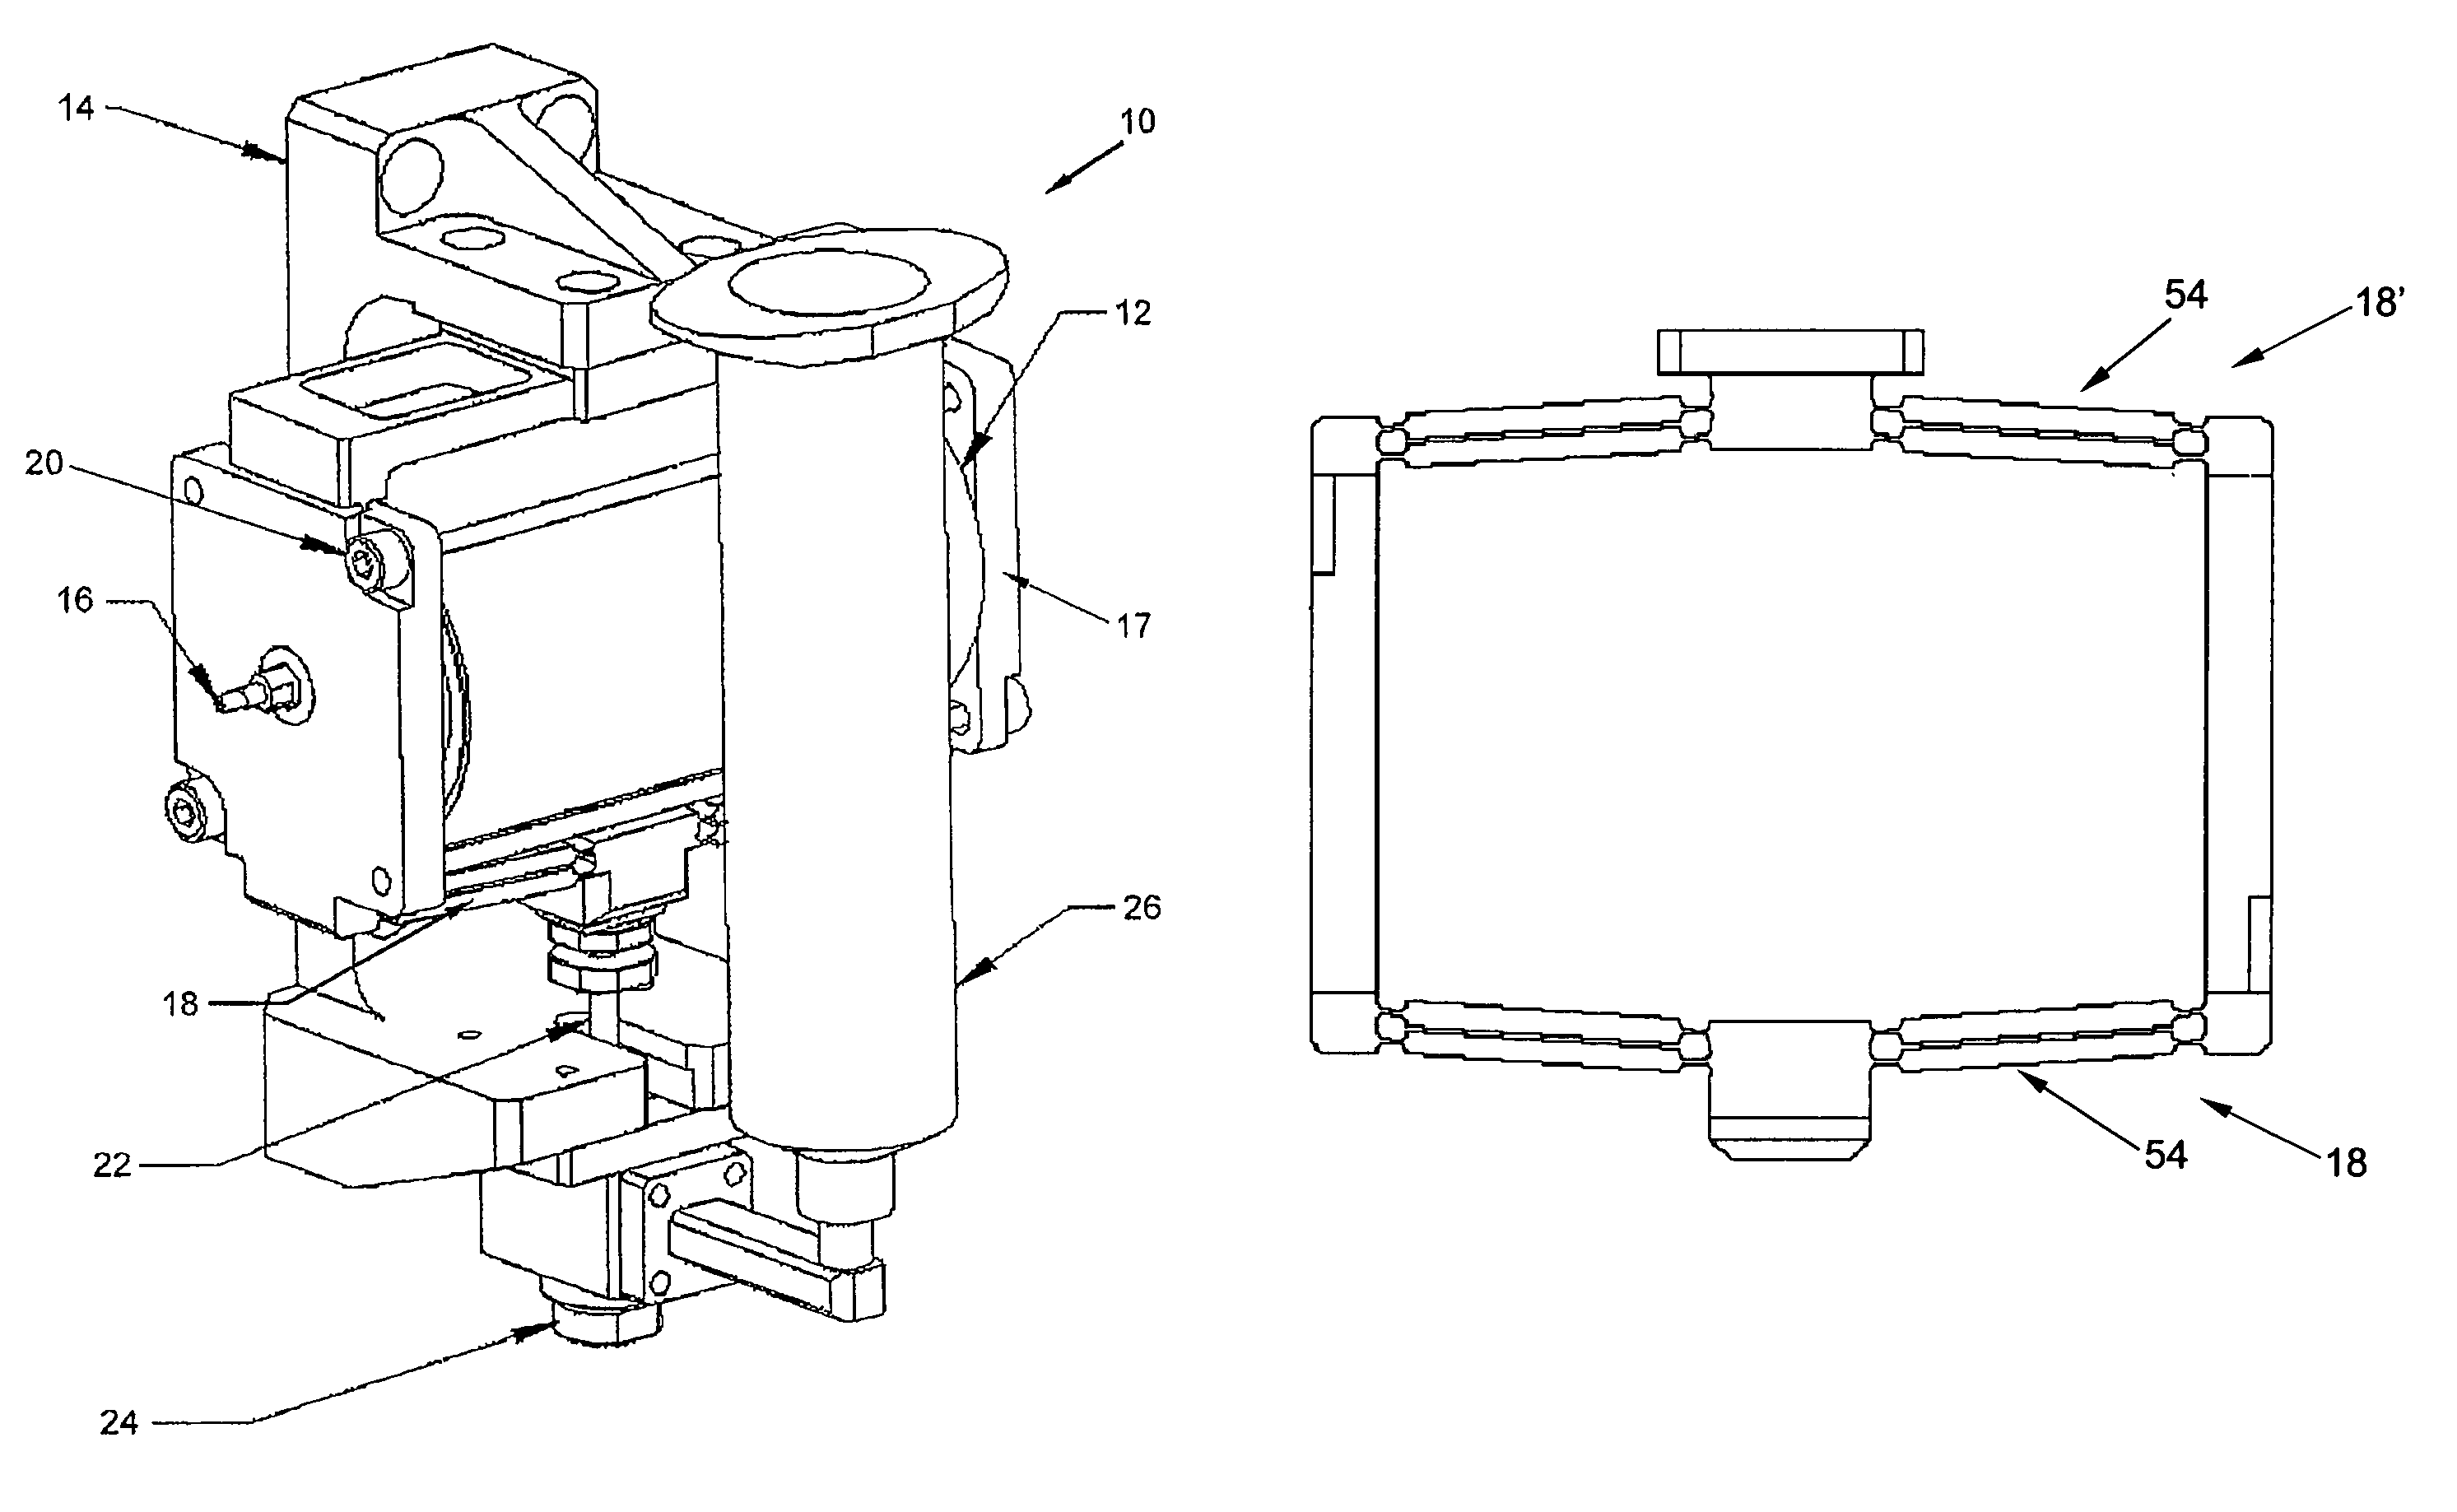 Jet dispenser comprising magnetostrictive actuator